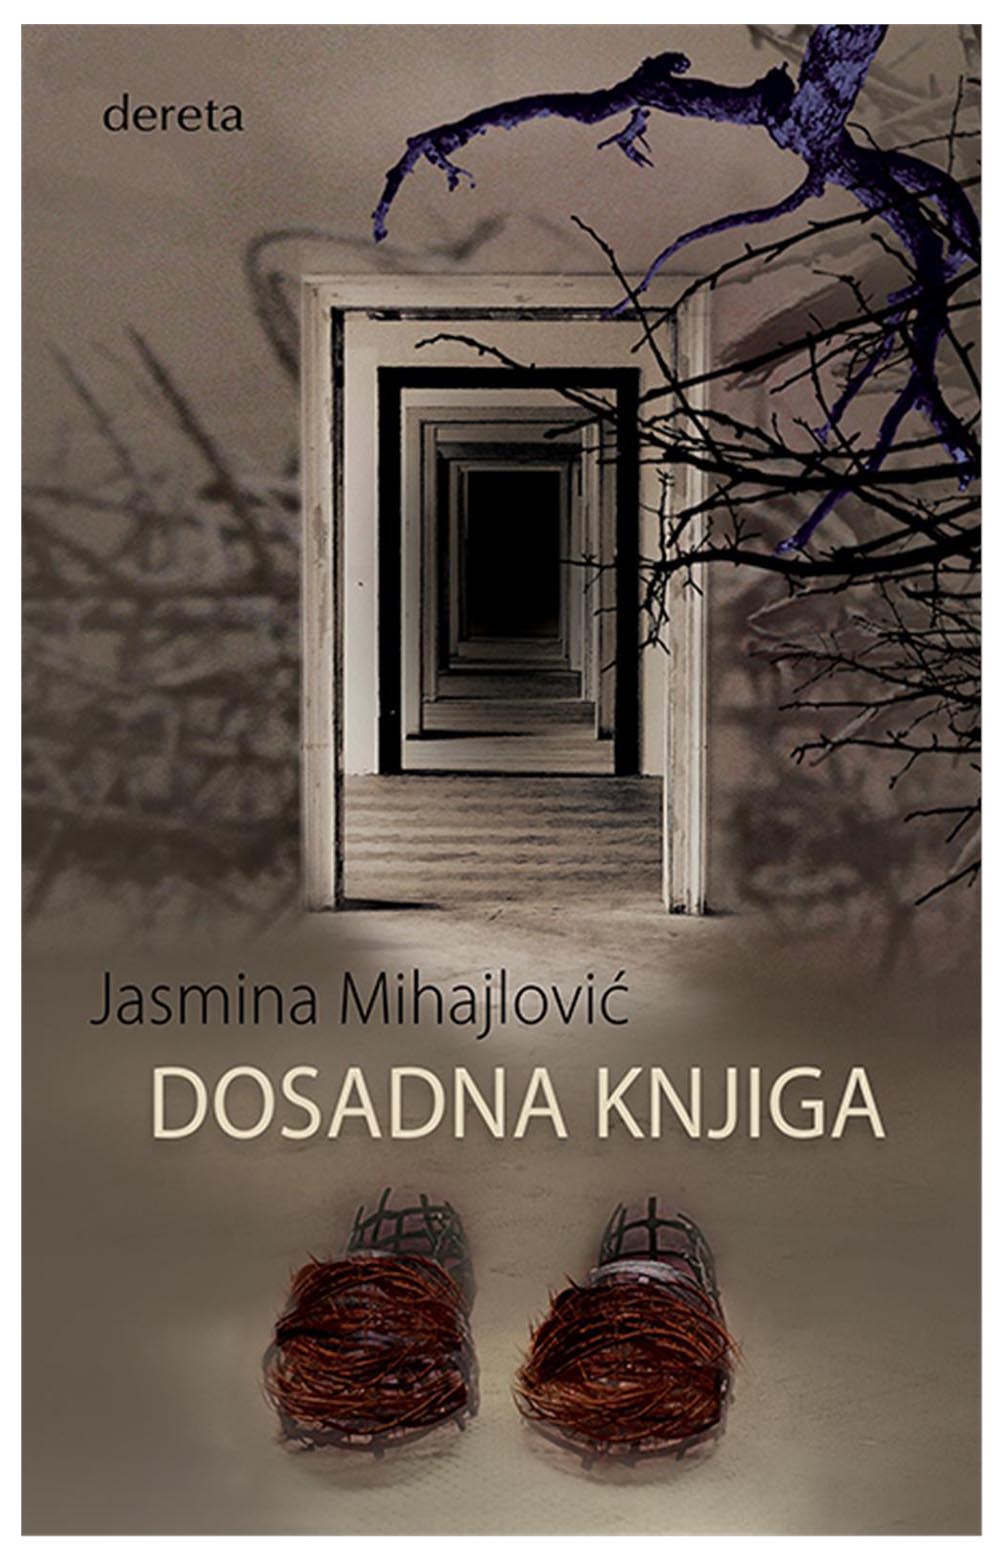 JASMINA MIHAJLOVIC'S NEW BOOK